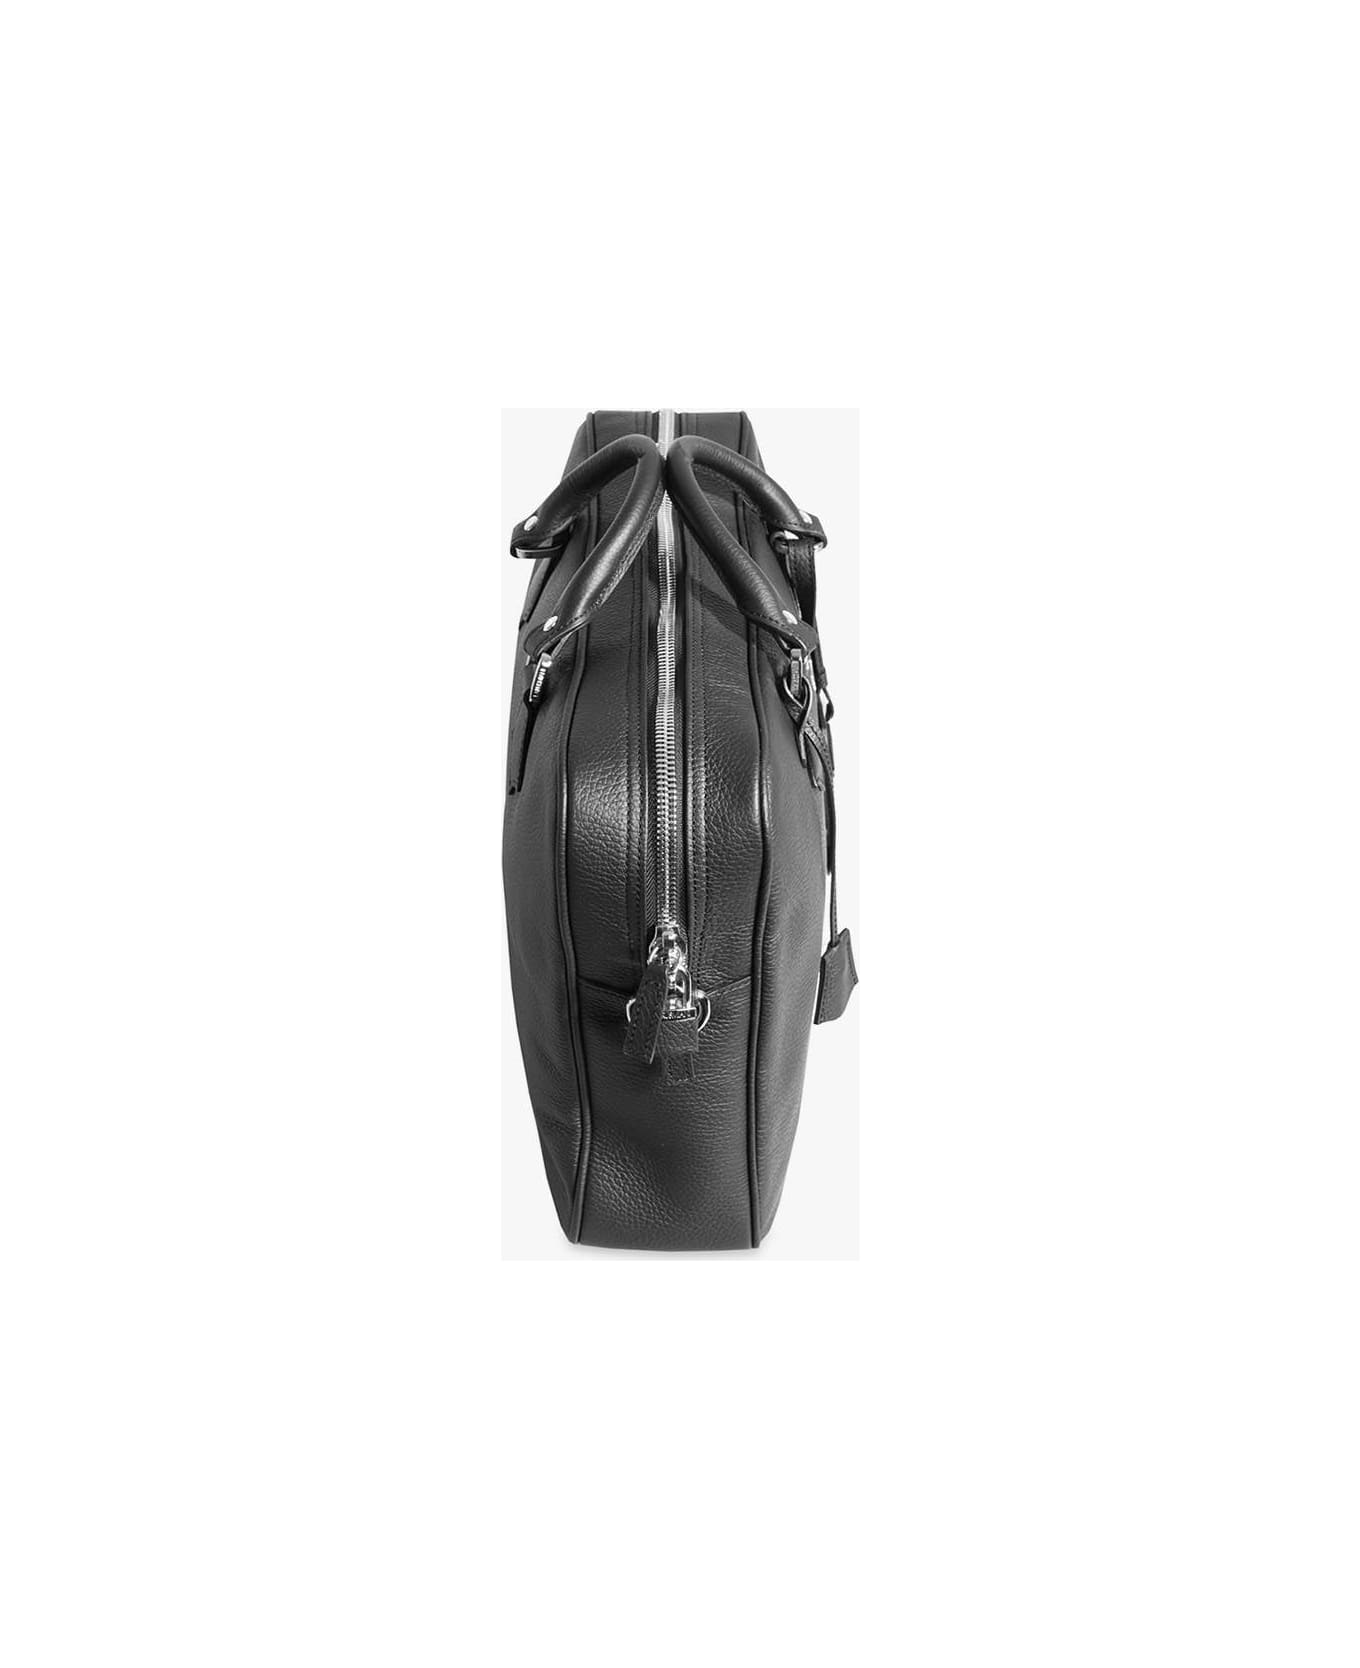 Larusmiani Briefcase 'piazza Affari' Luggage - Black トラベルバッグ